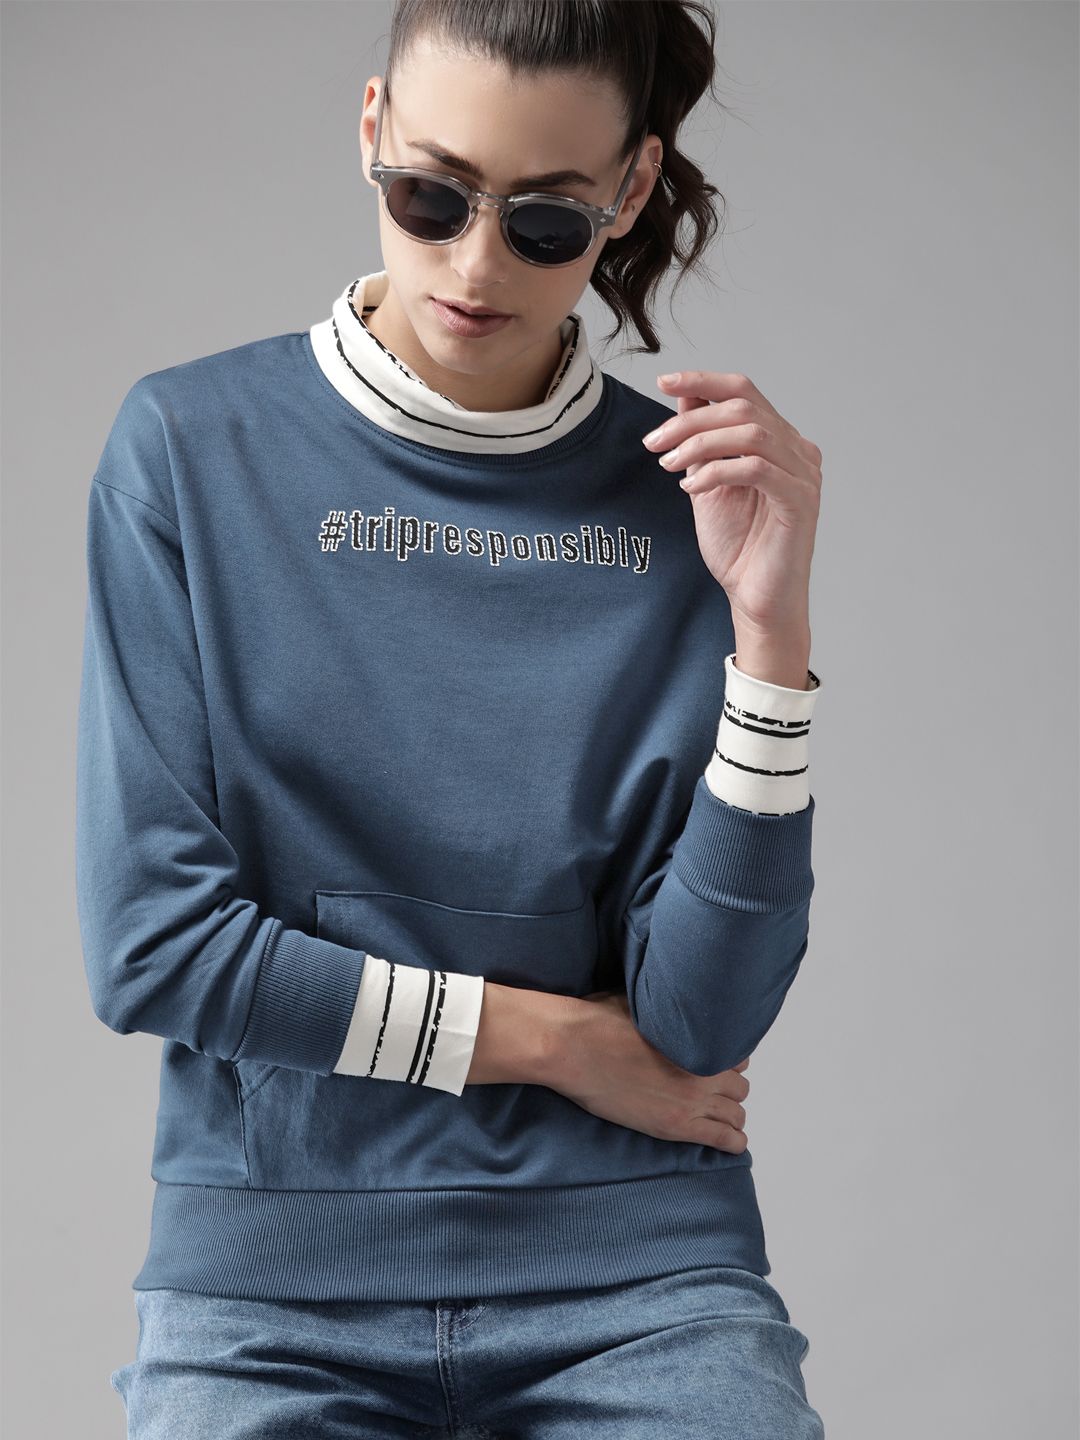 Roadster Women Teal Blue and Black Typography Print Sweatshirt Price in India